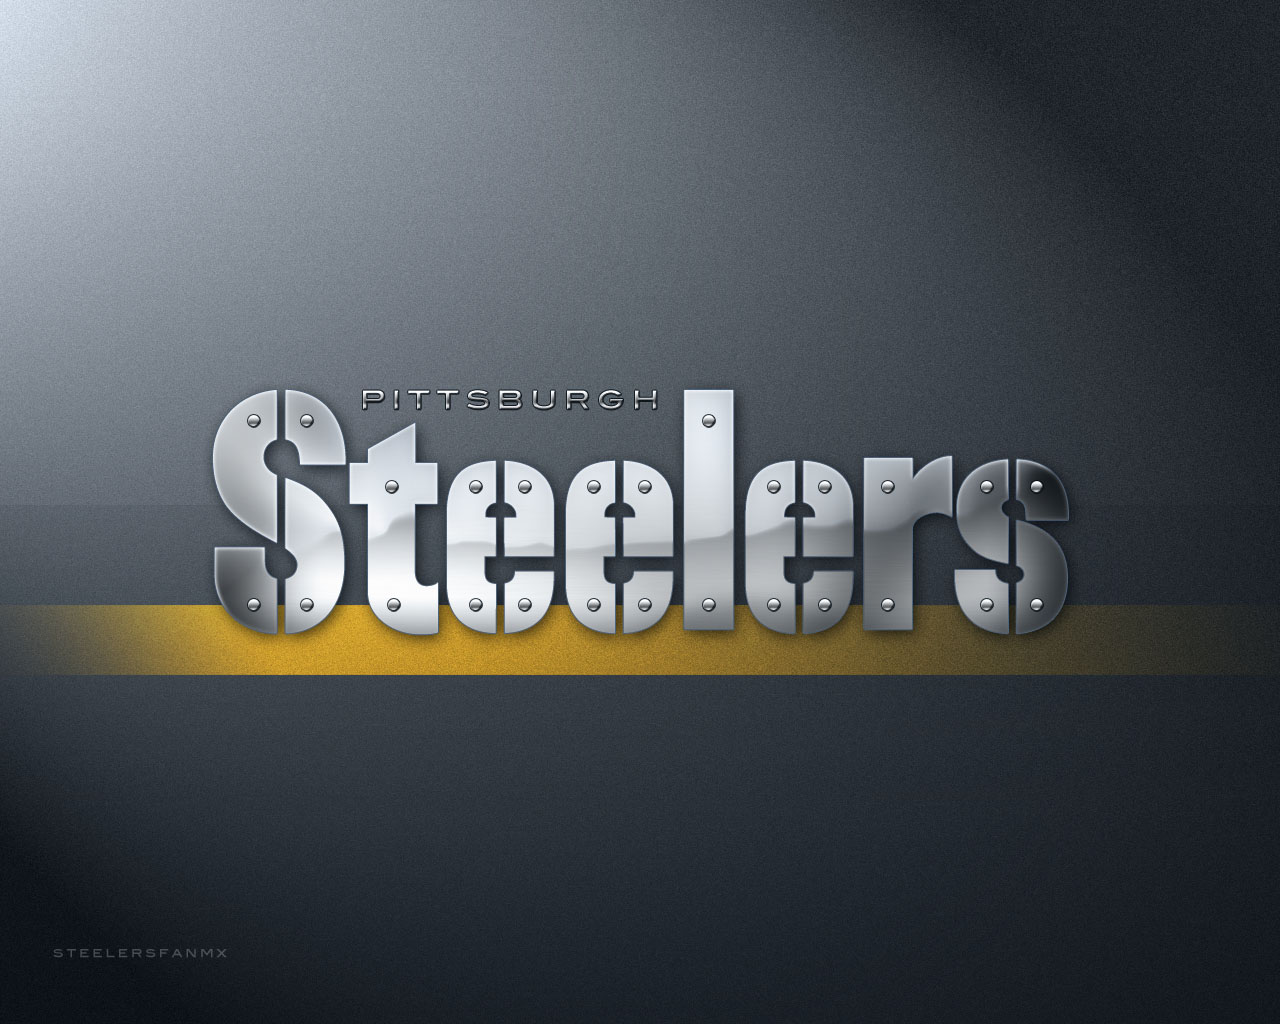  Pittsburgh Steelers desktop wallpaper Pittsburgh Steelers wallpapers 1280x1024